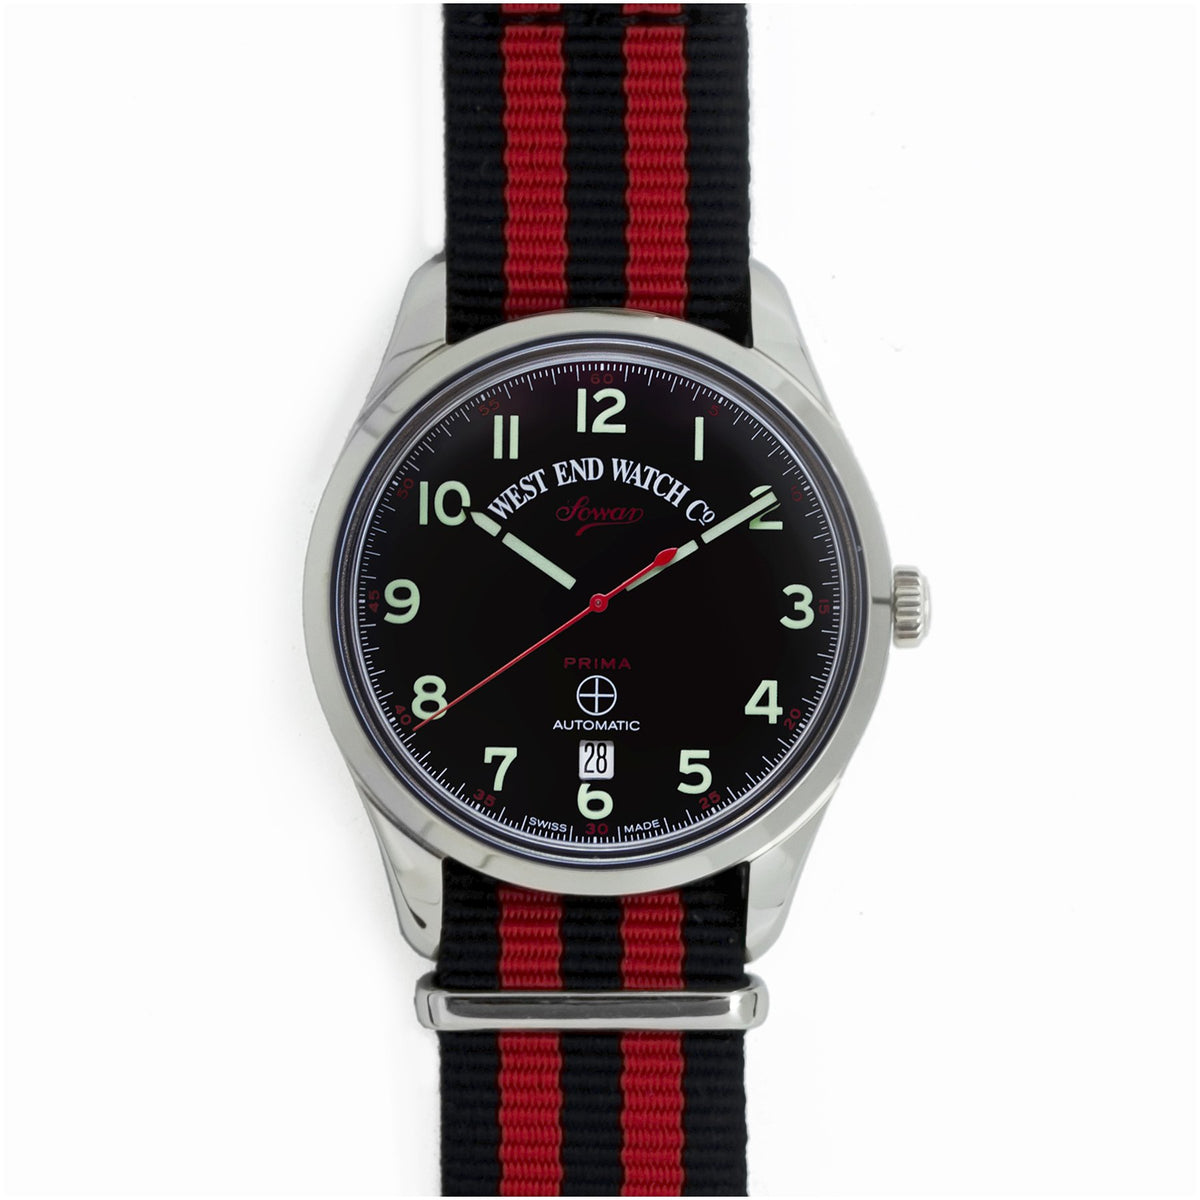 West End Watch Co. - Sowar Prima - Black Dial